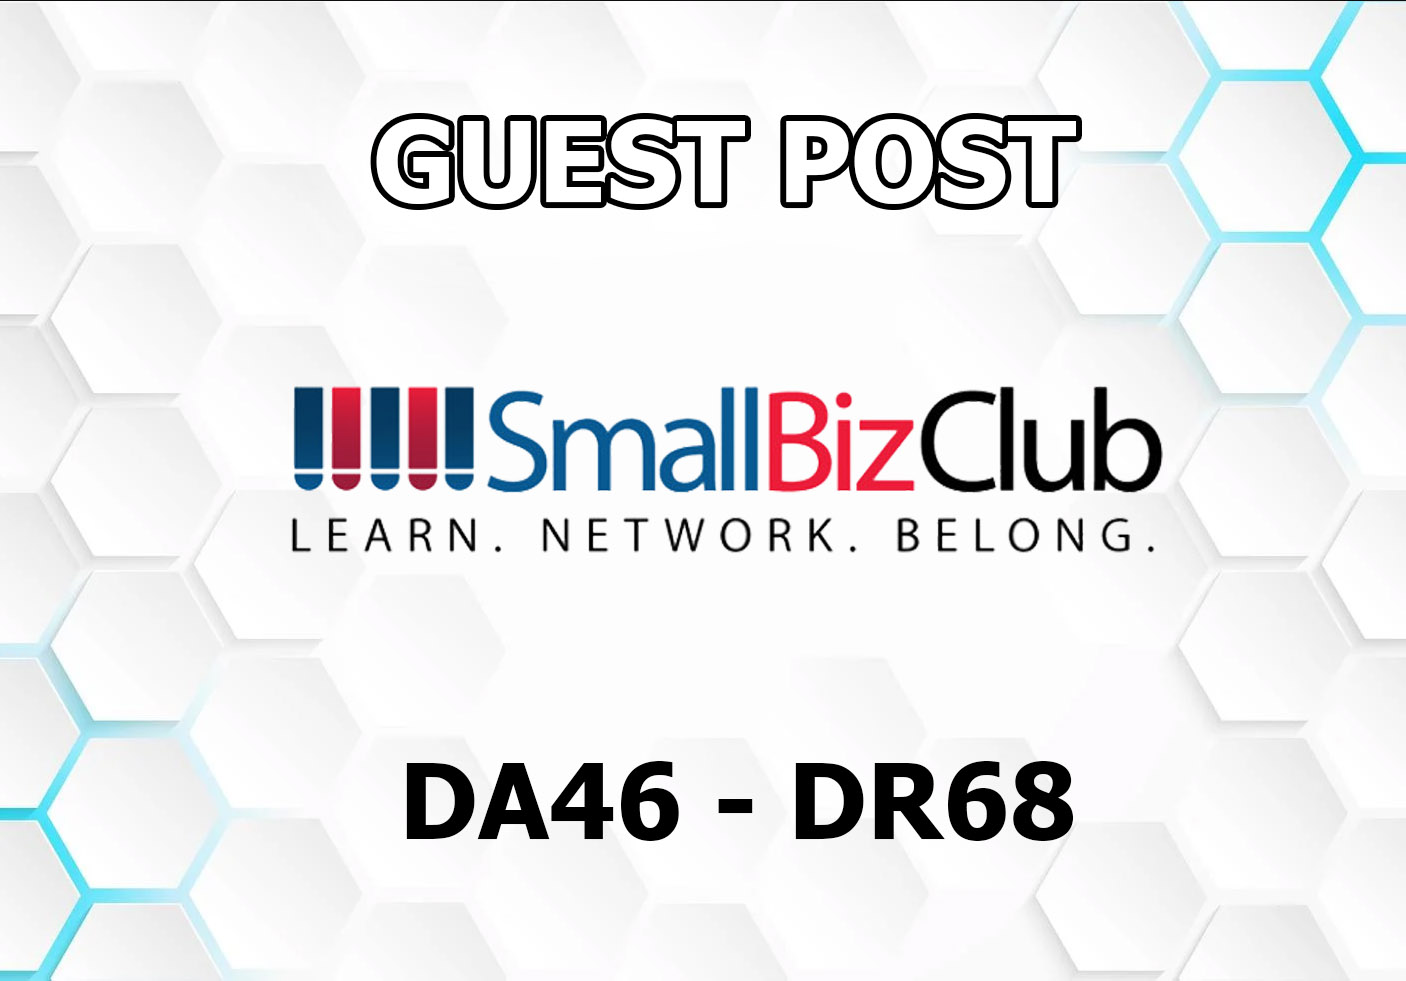 Guest post on business site Small Biz Club DA46 Smallbizclub.com